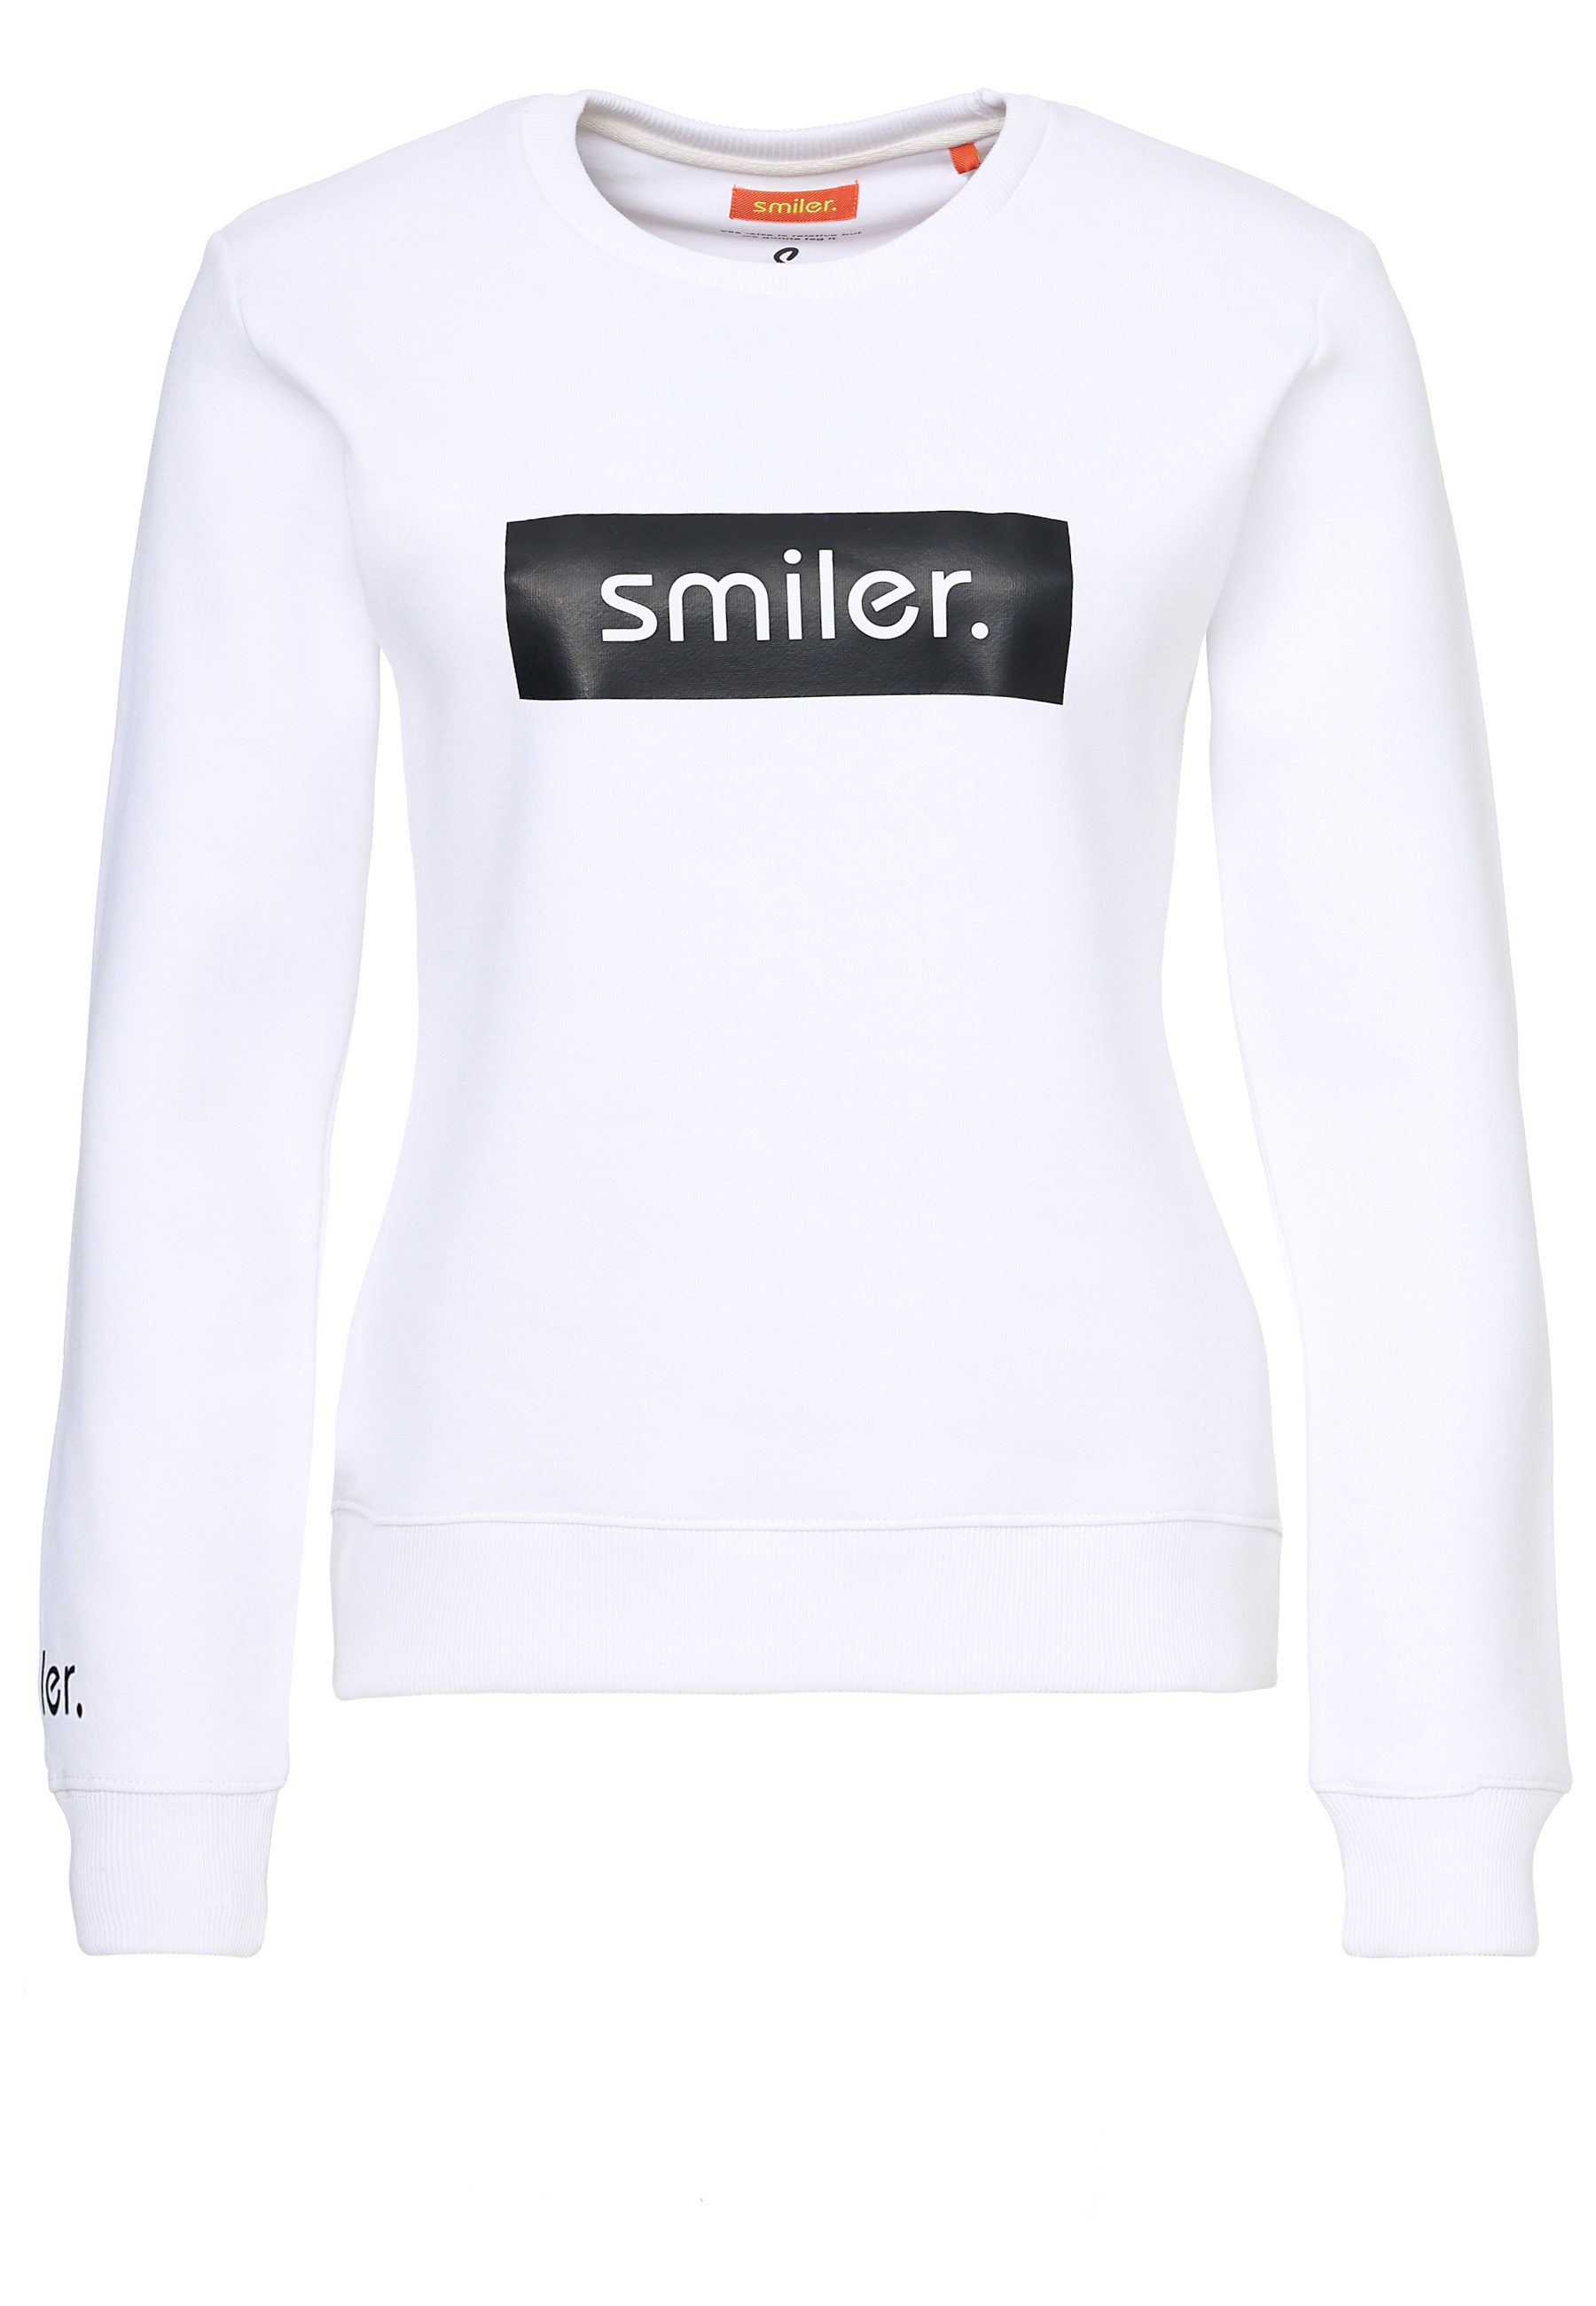 Толстовка smiler. pullover Cuddle., белый цена и фото